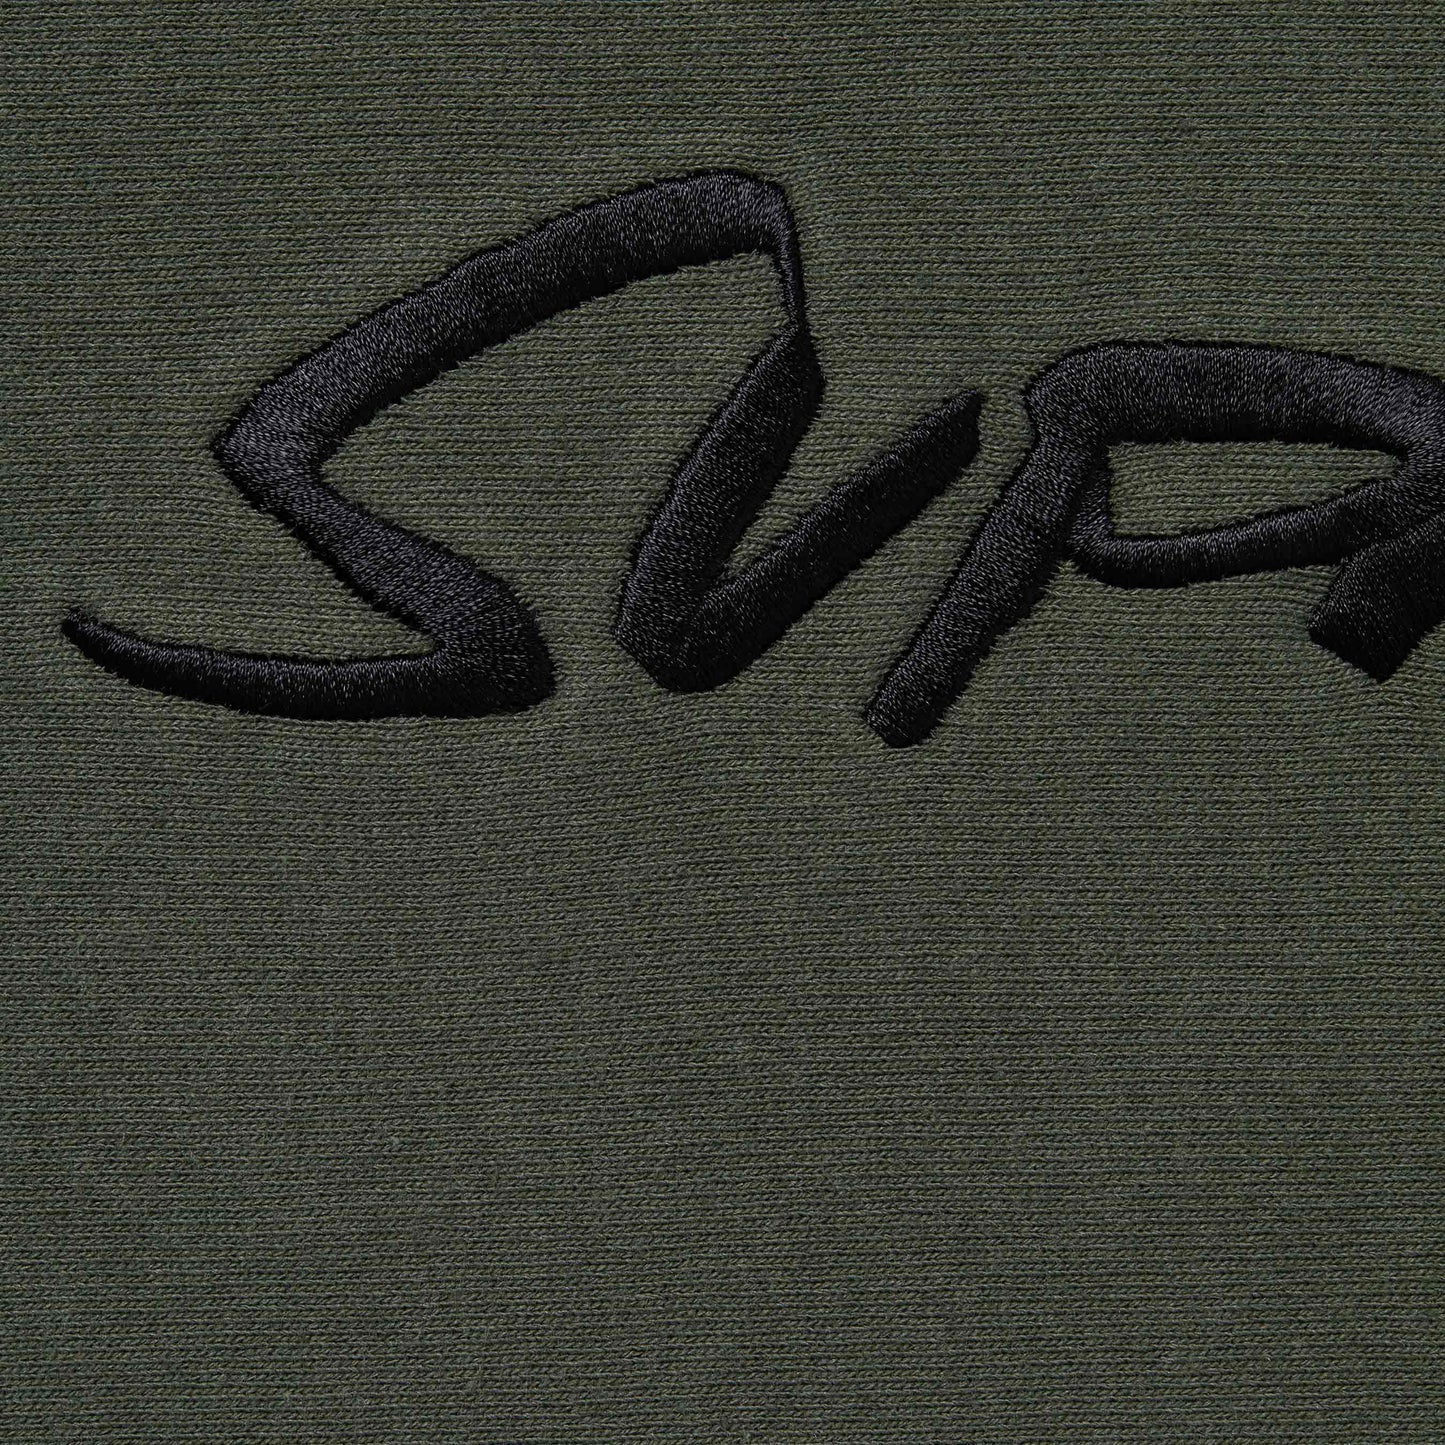 Supreme Futura Hooded Sweatshirt "Dark Olive"